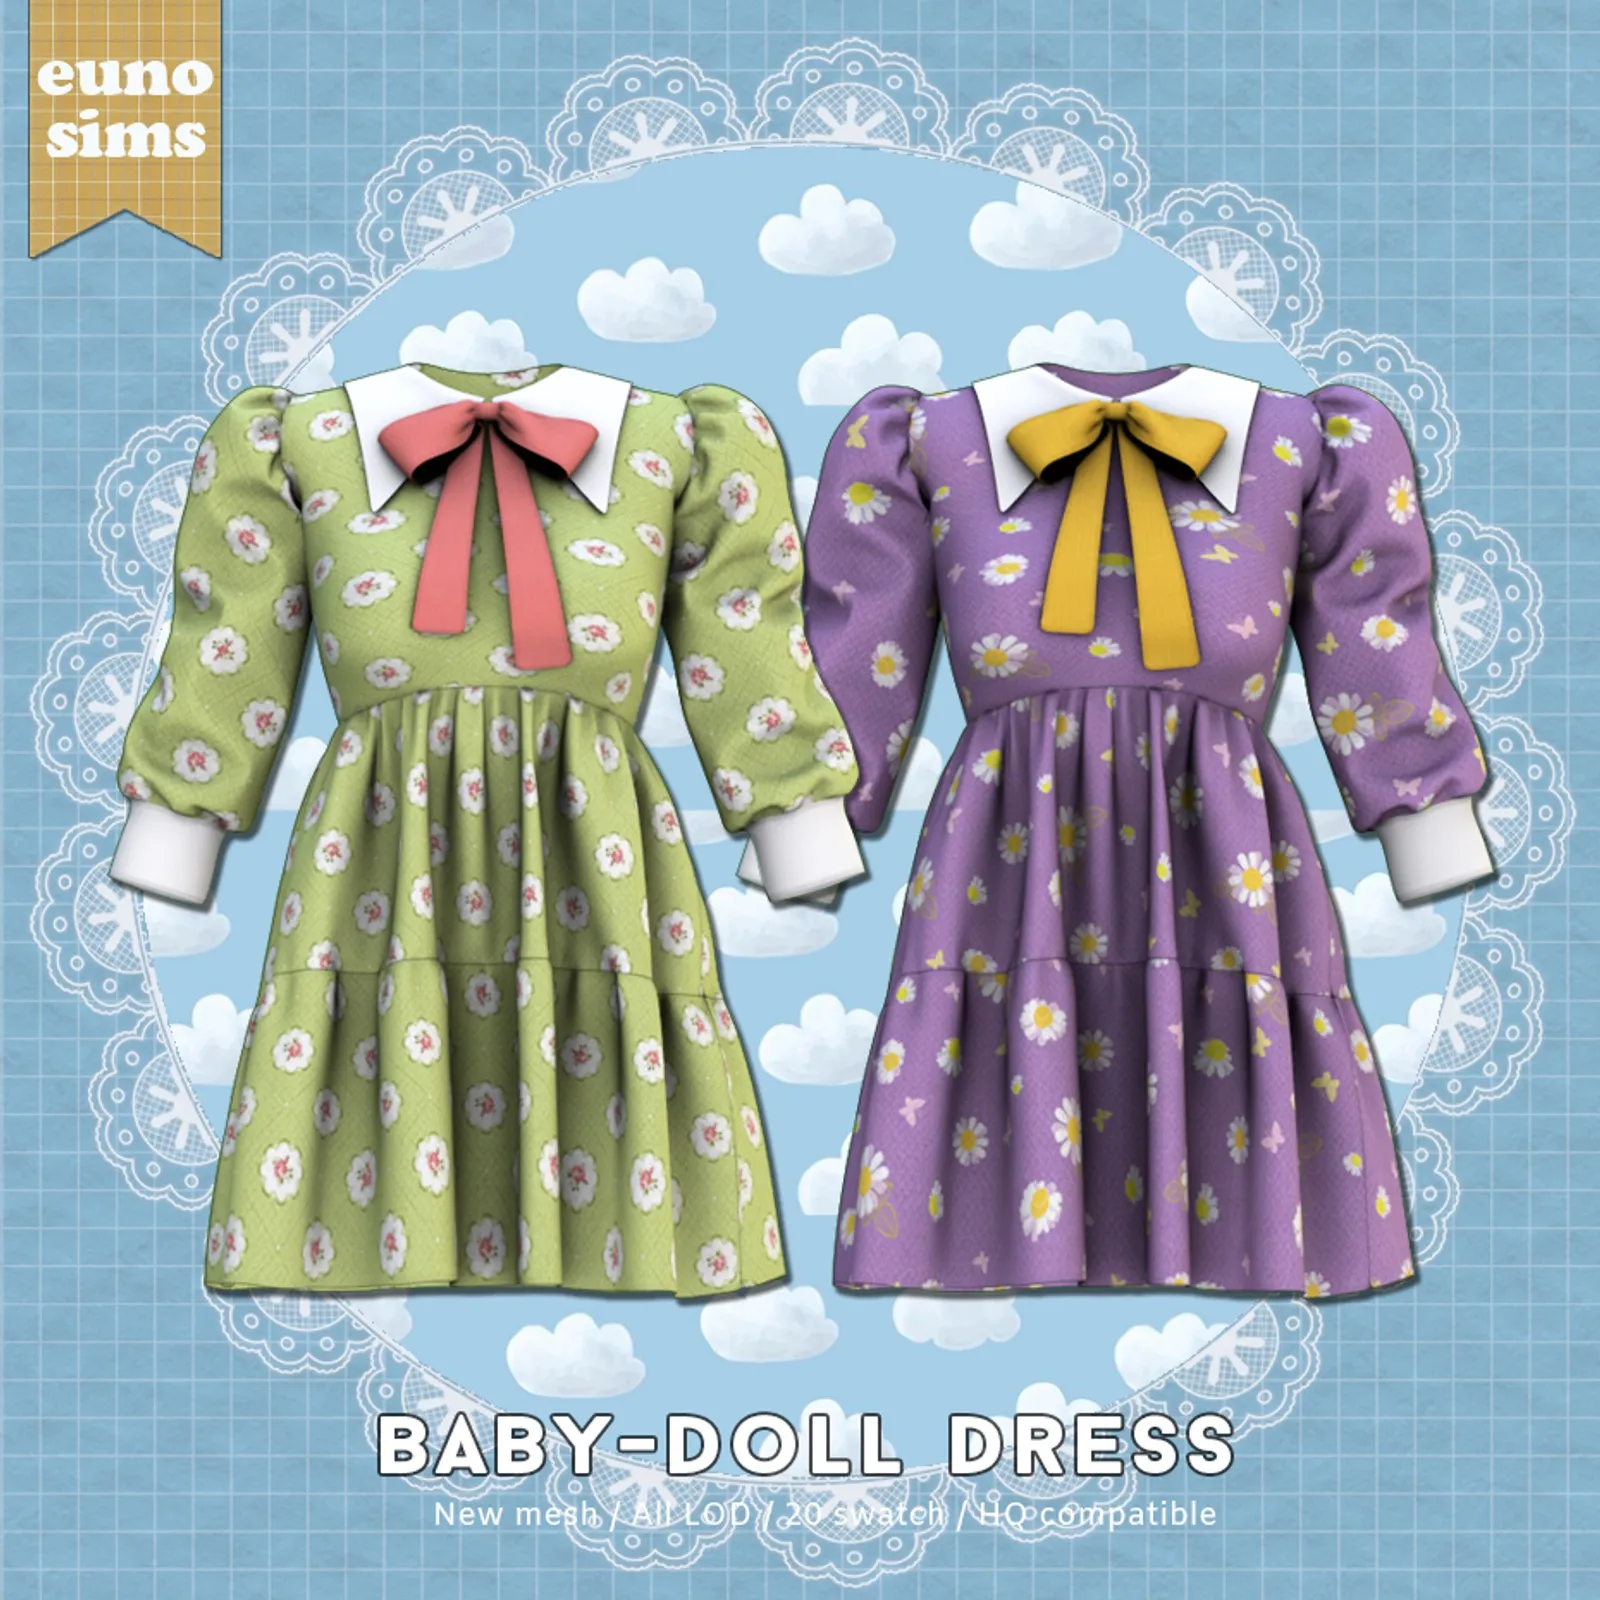 baby-doll dress